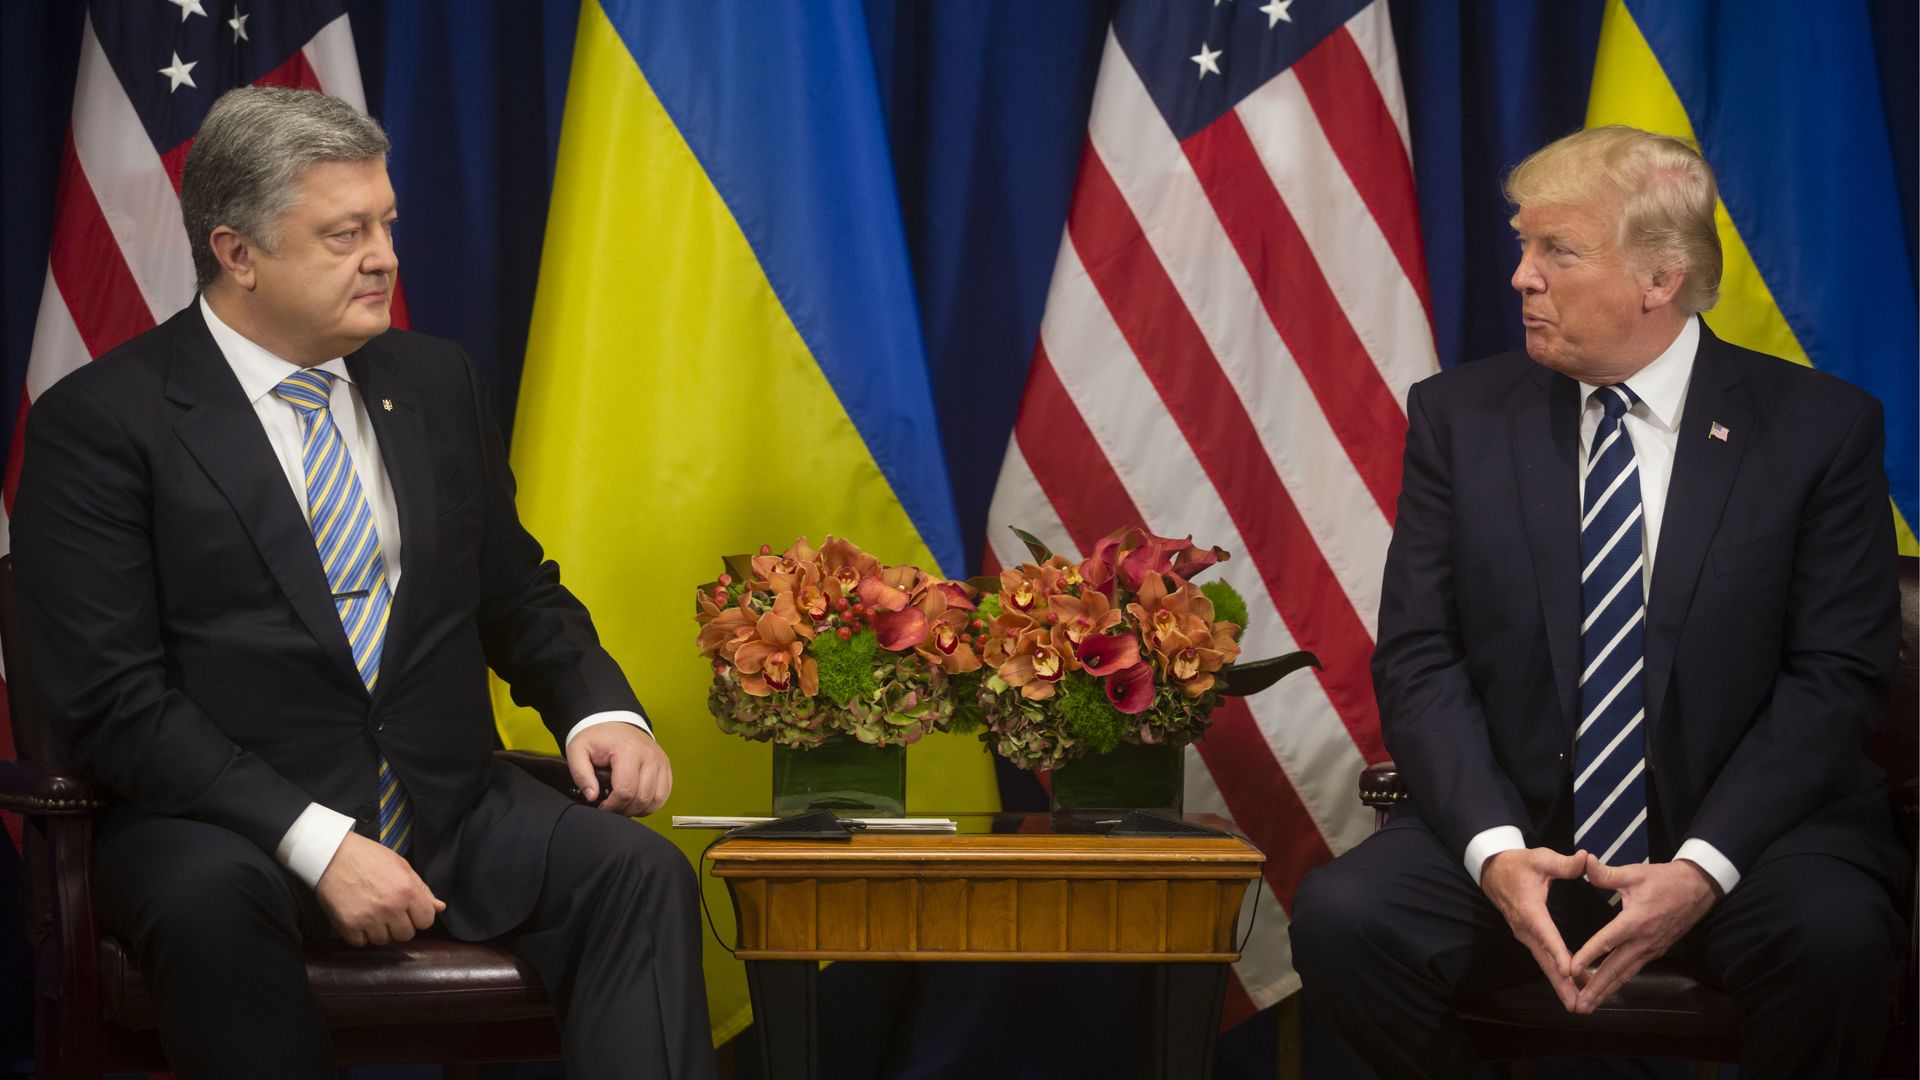 President Trump and Petro Poroshenko